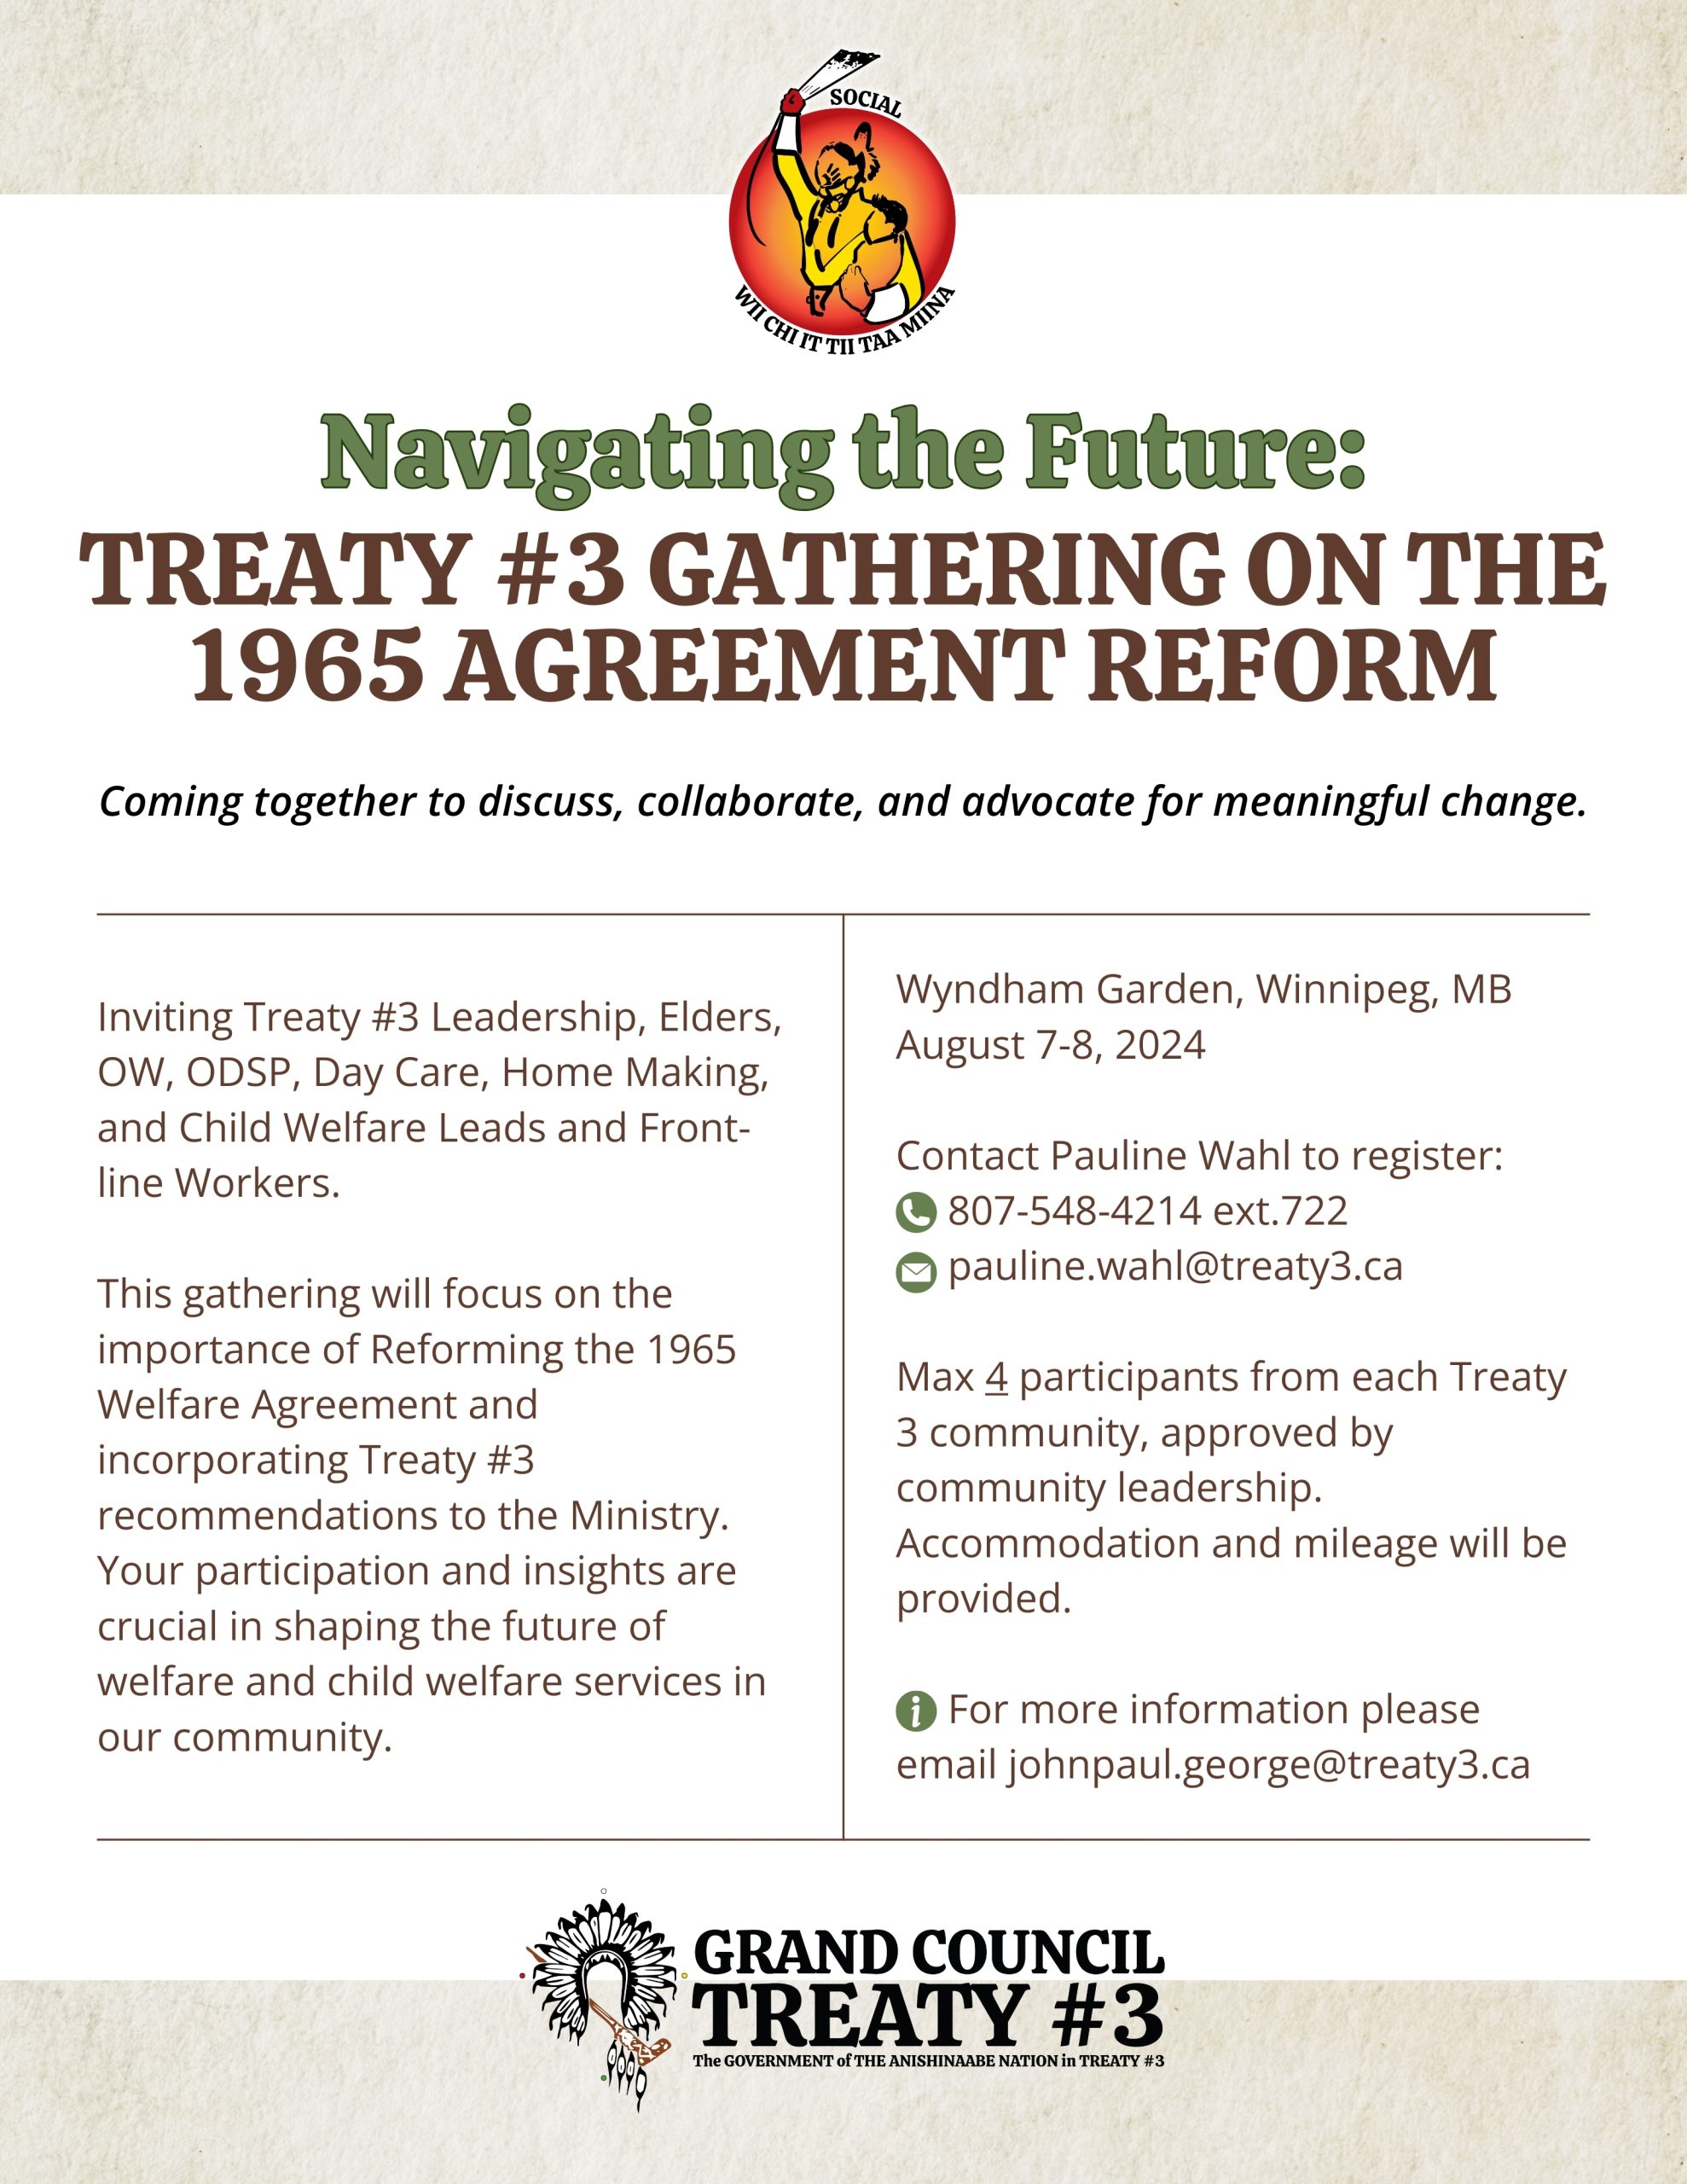 Treaty #3 Gathering on the 1965 Agreement Reform